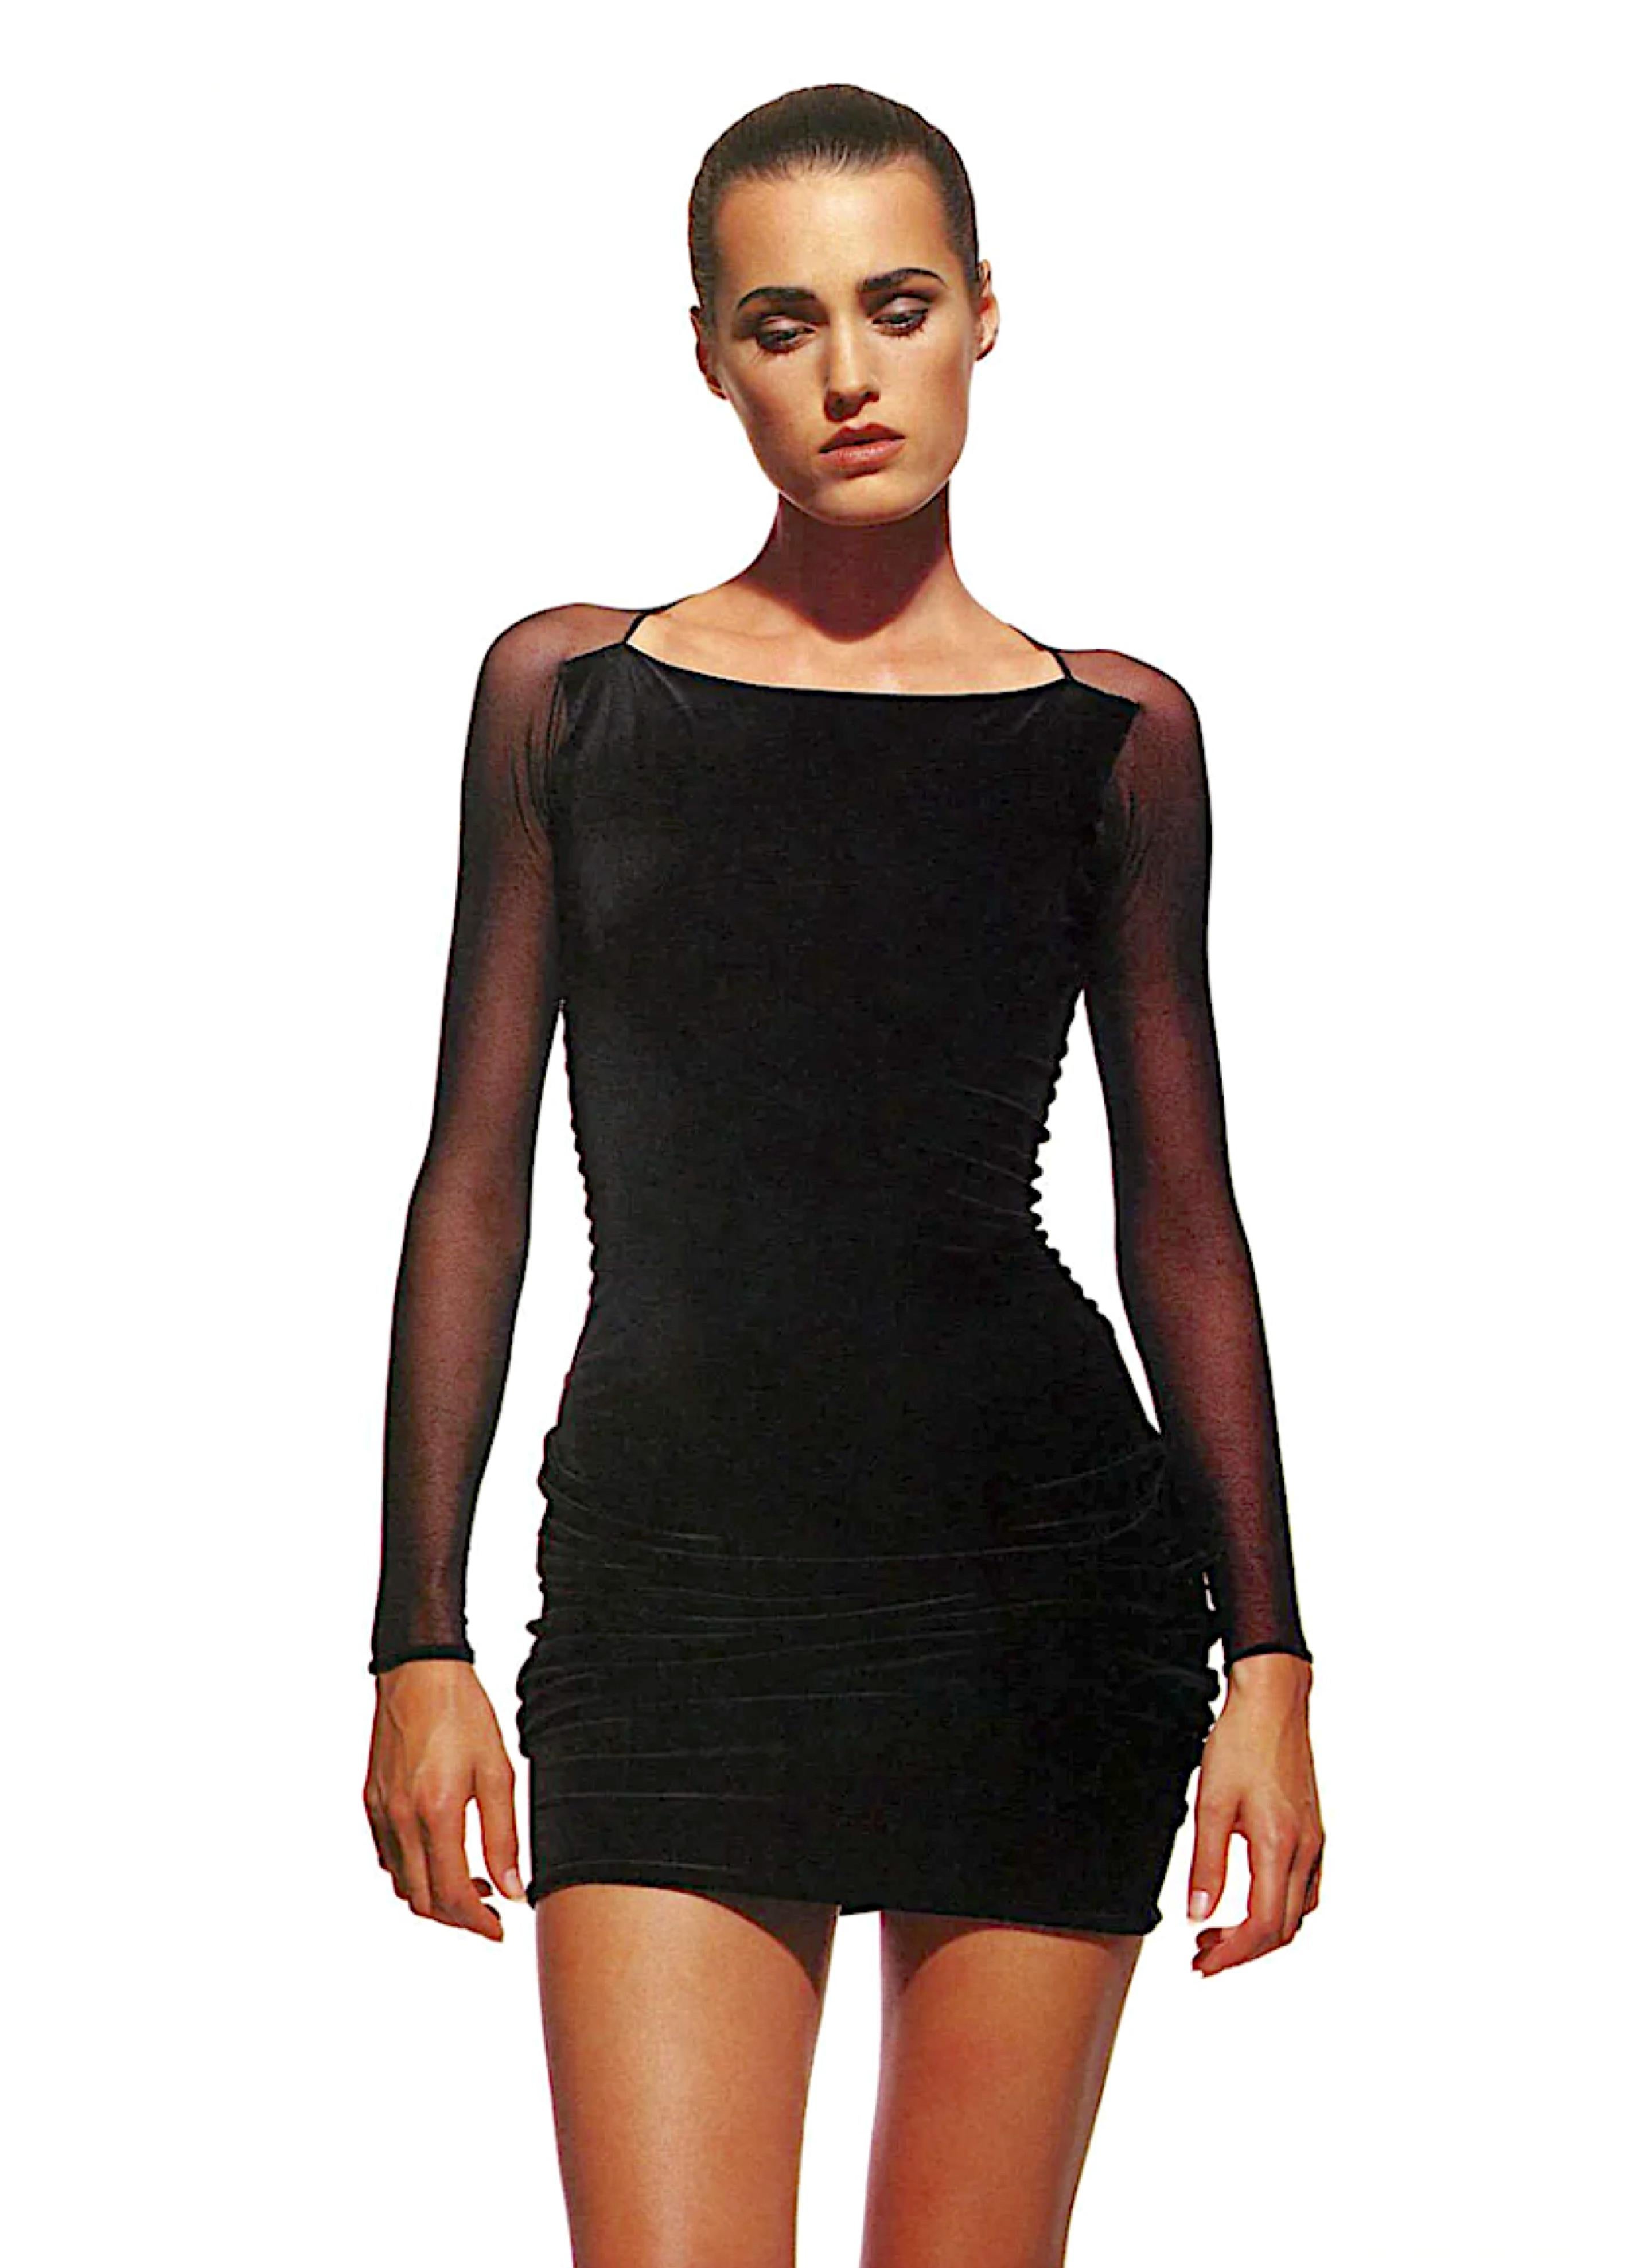 Giorgio di Sant' Angelo vintage 1989 documented black stretch net wrap dress For Sale 3